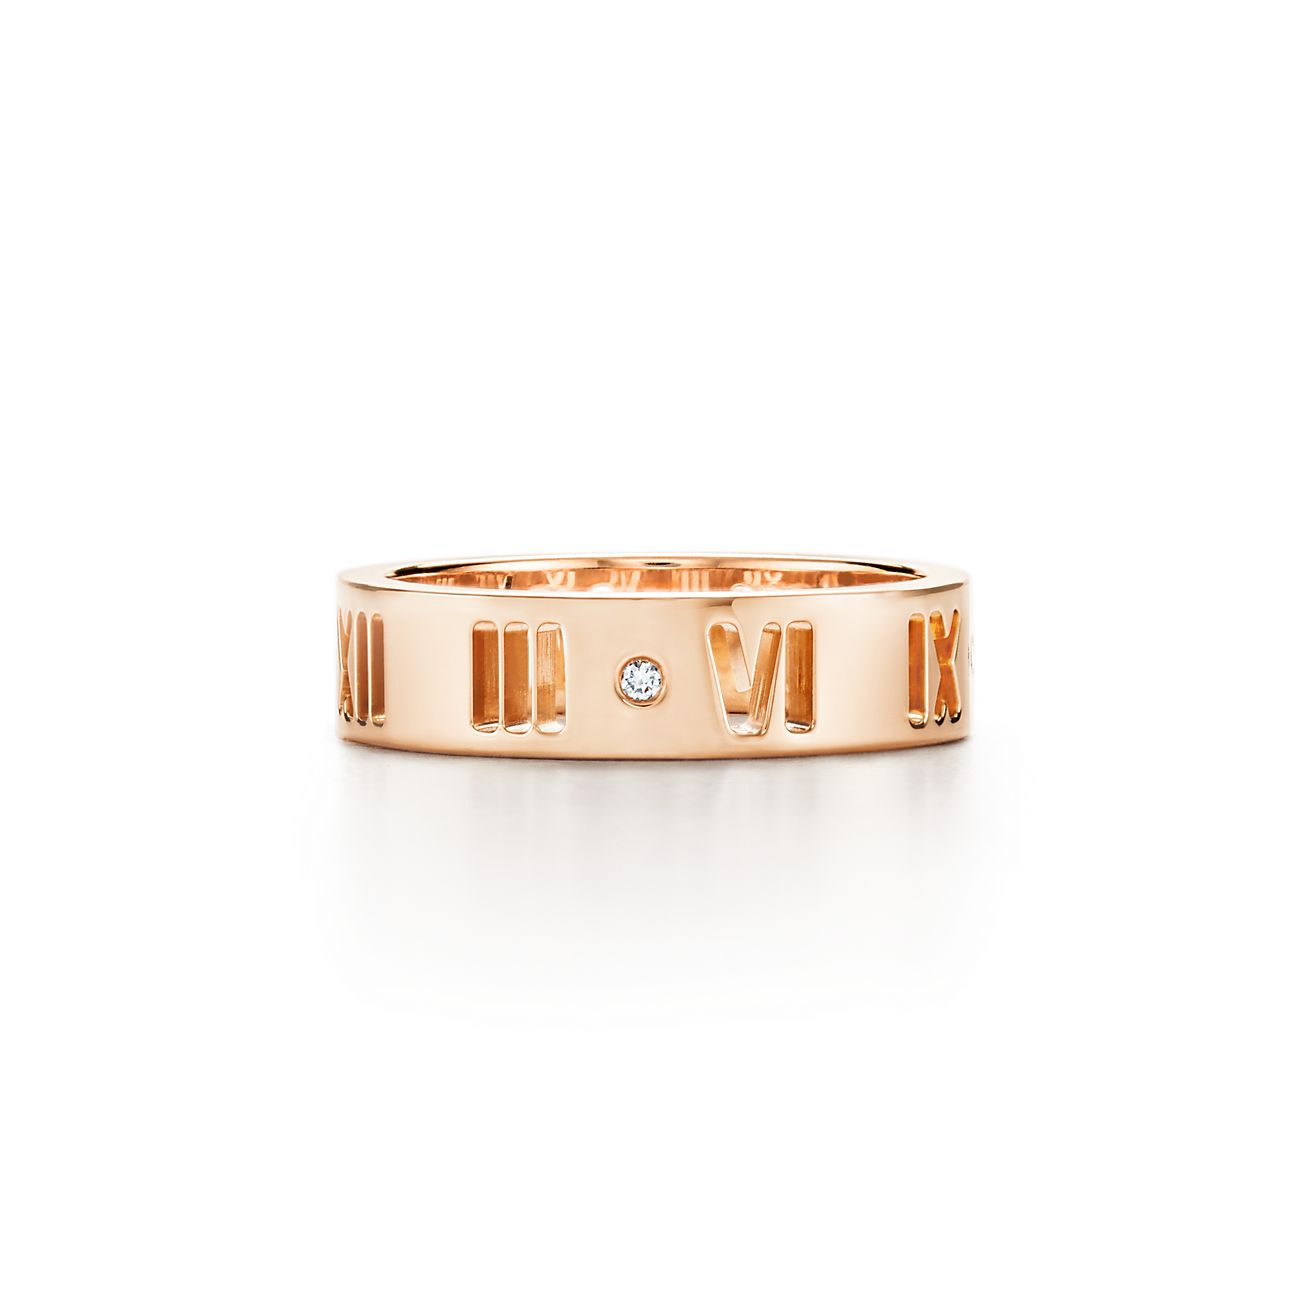 Atlas™ pierced ring in 18k rose gold 